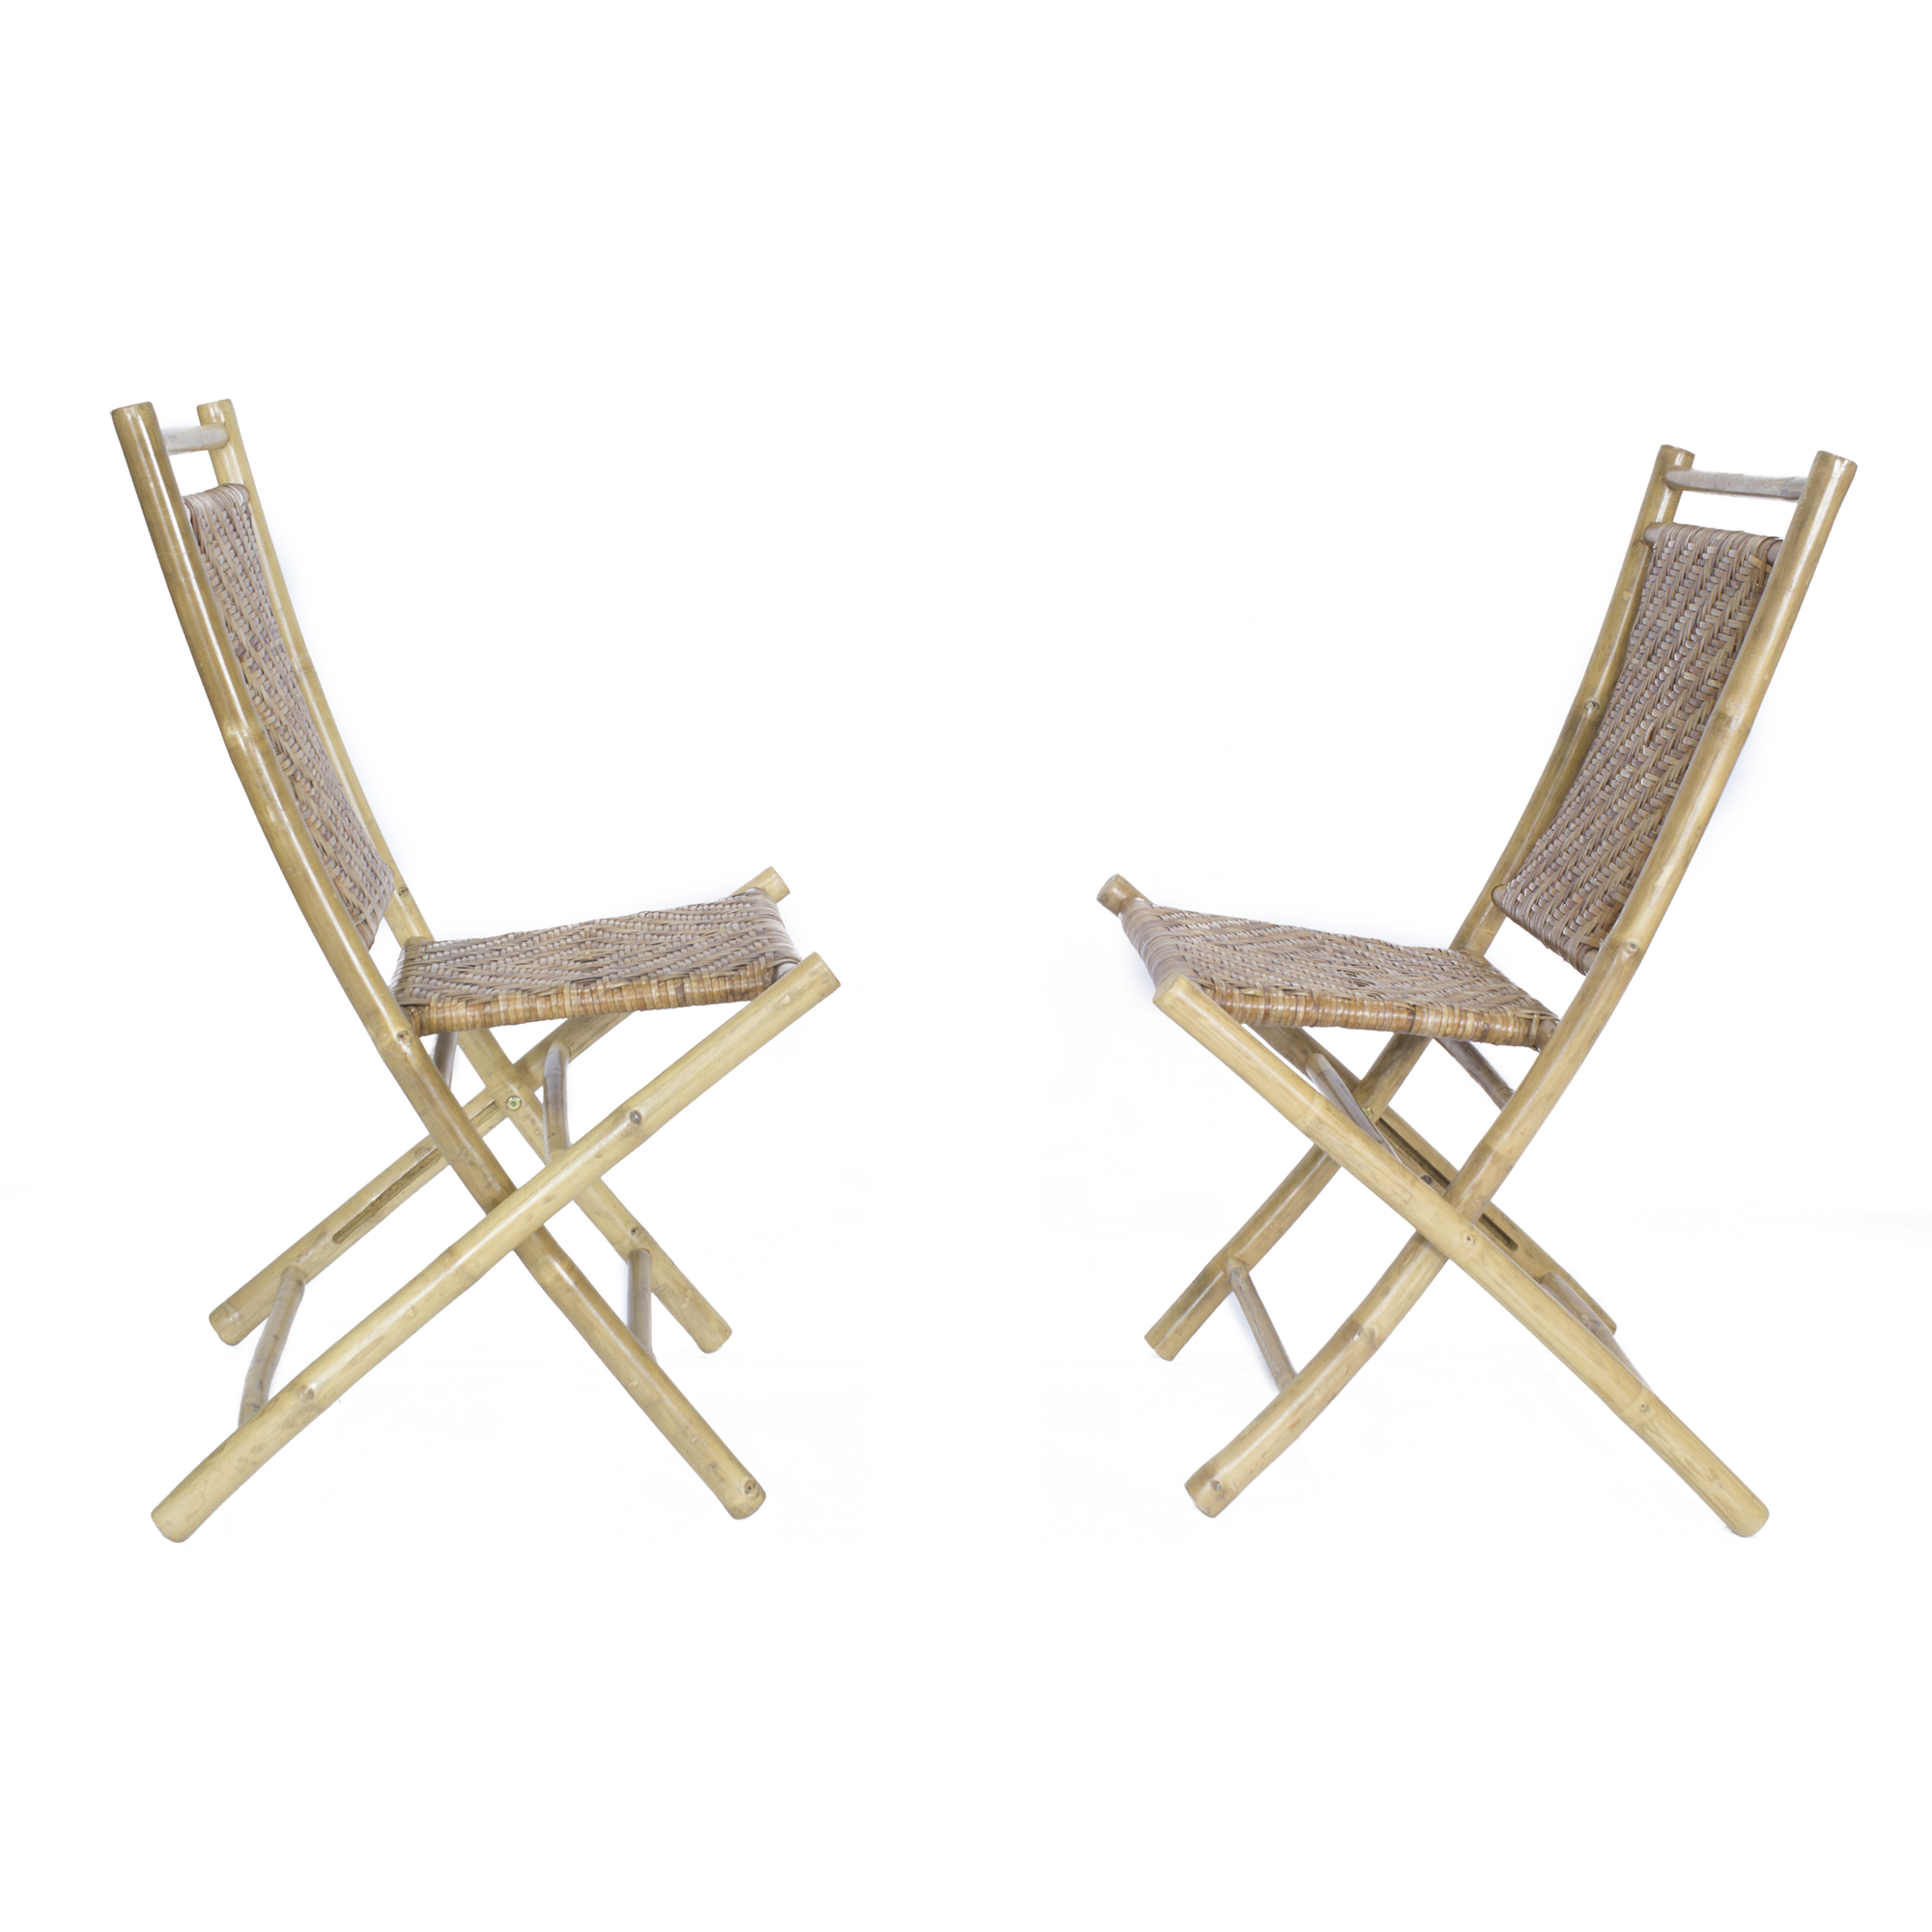 20" X 15" X 36" Brown Bamboo Folding Chair with a Rattan Skin Chevron Weave